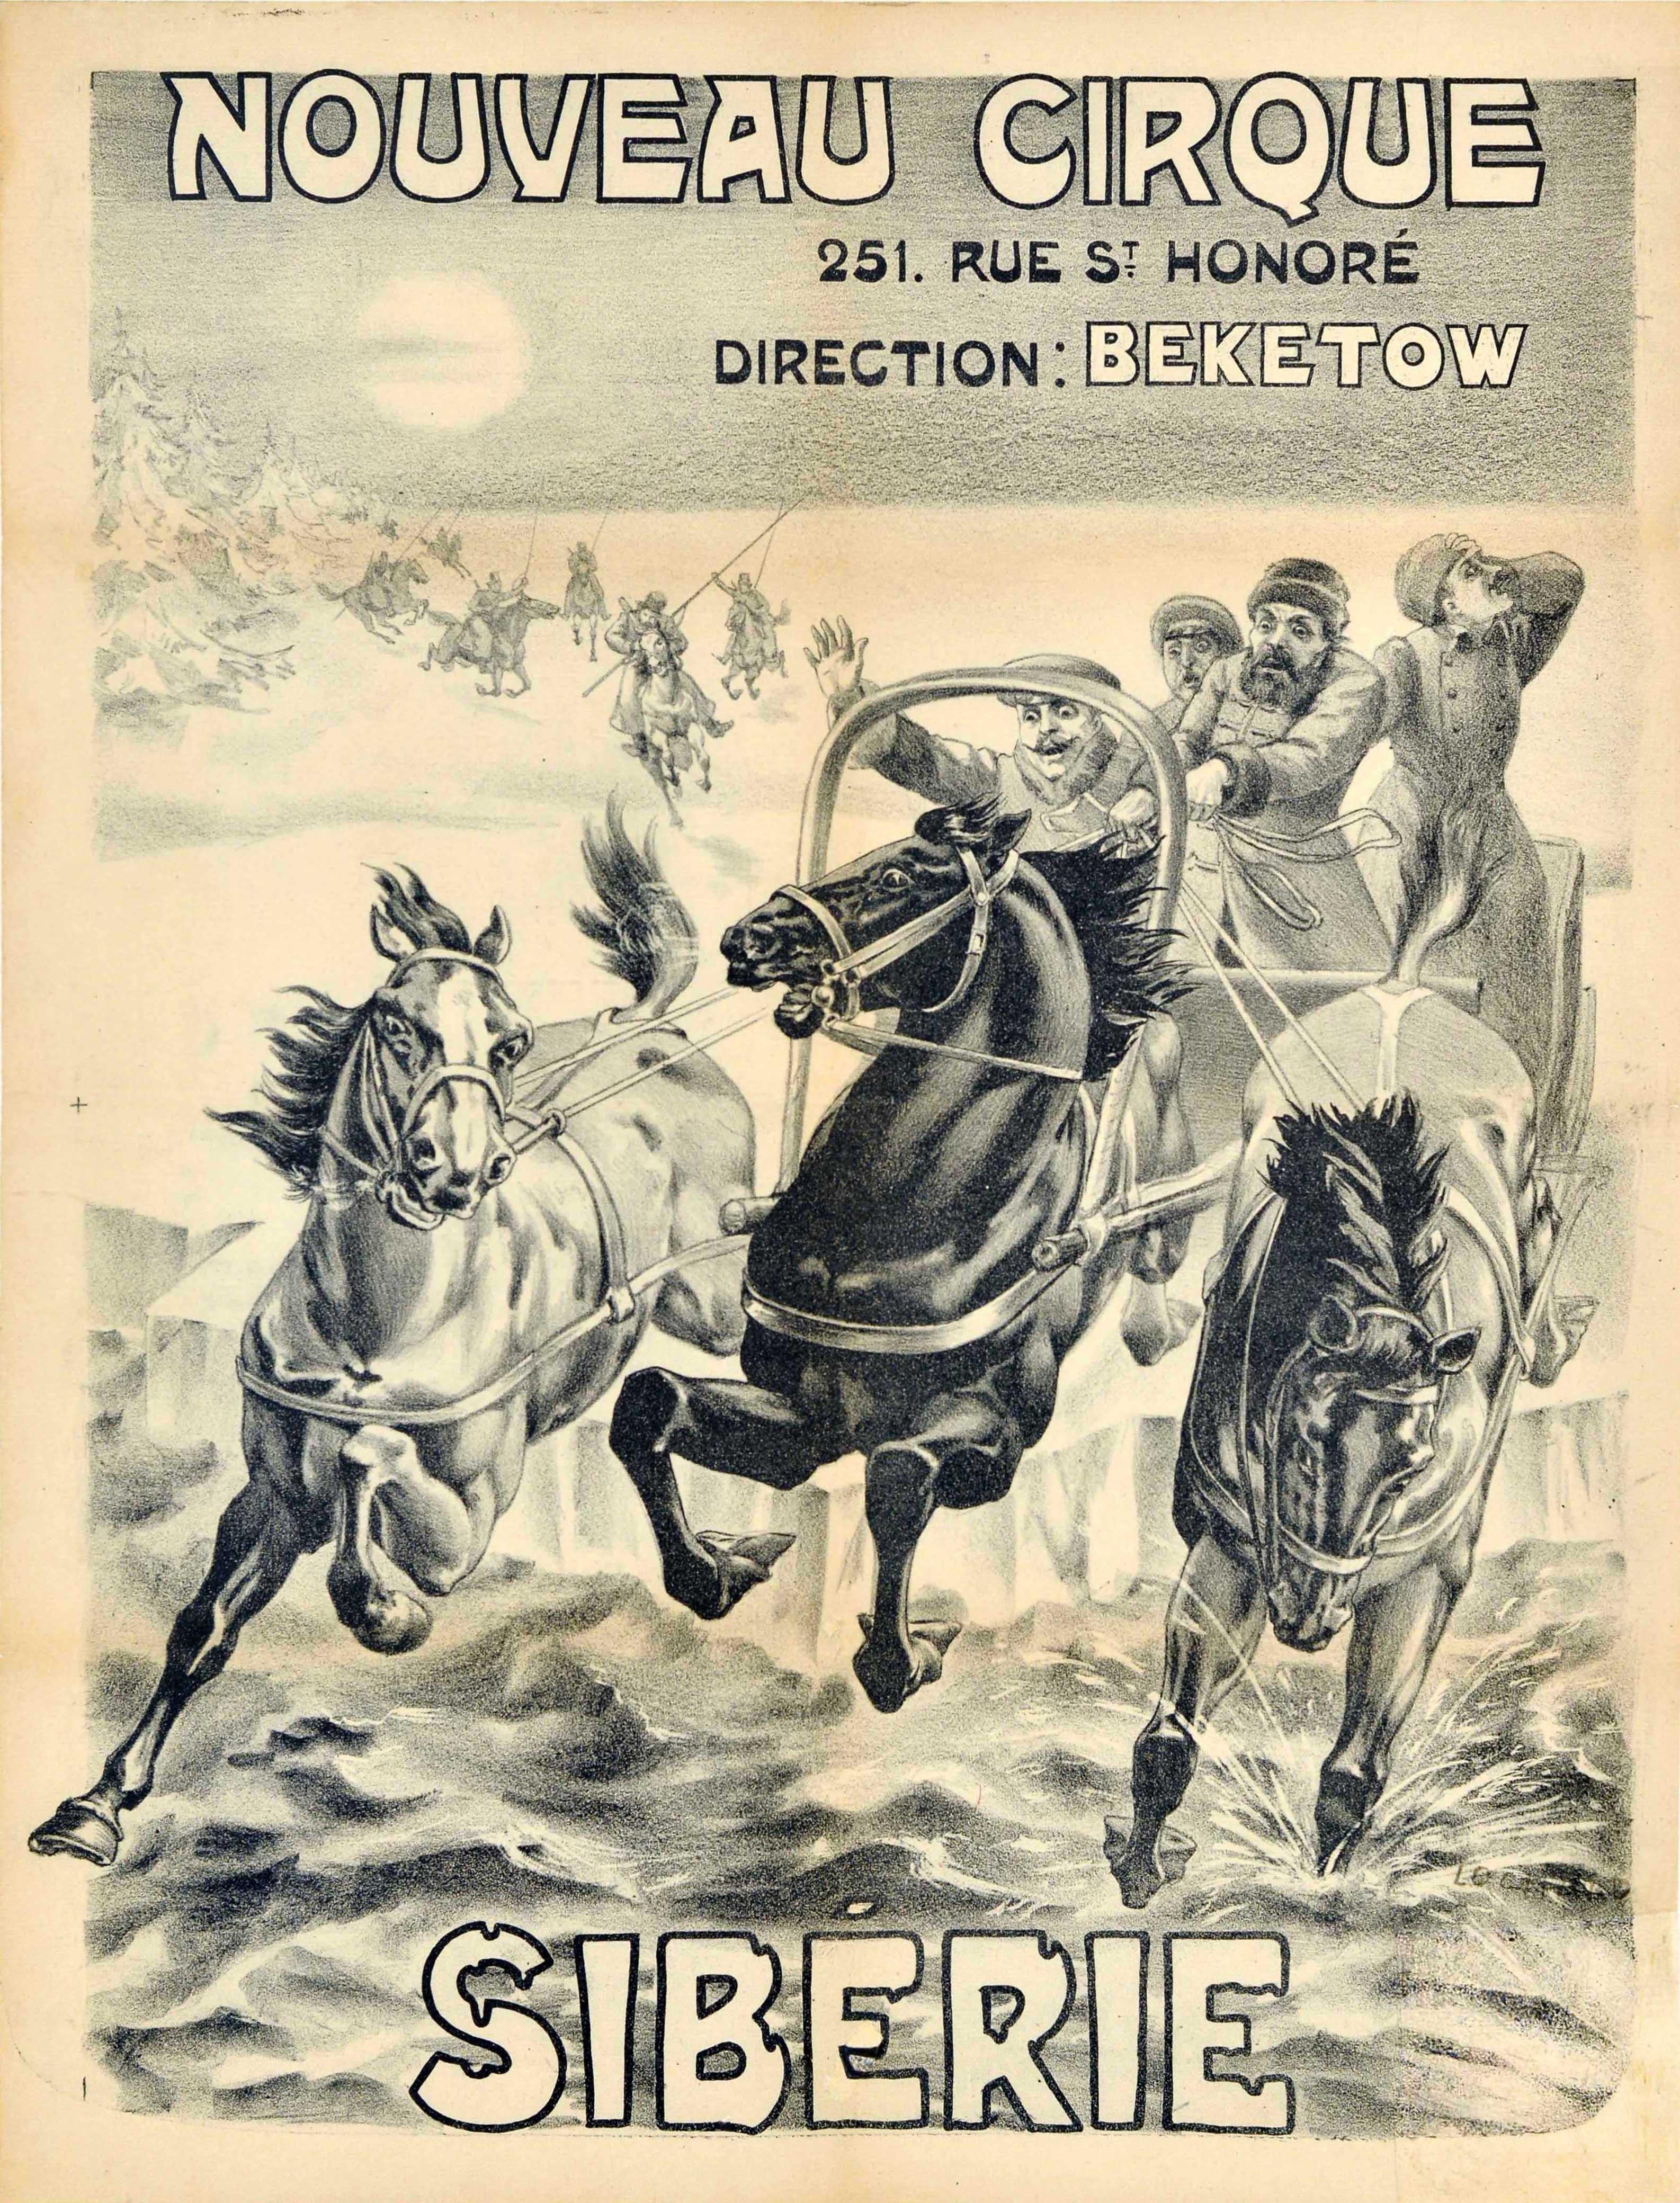 Unknown Print - Original Antique Advertising Poster Nouveau Cirque Siberie Beketow Circus Show